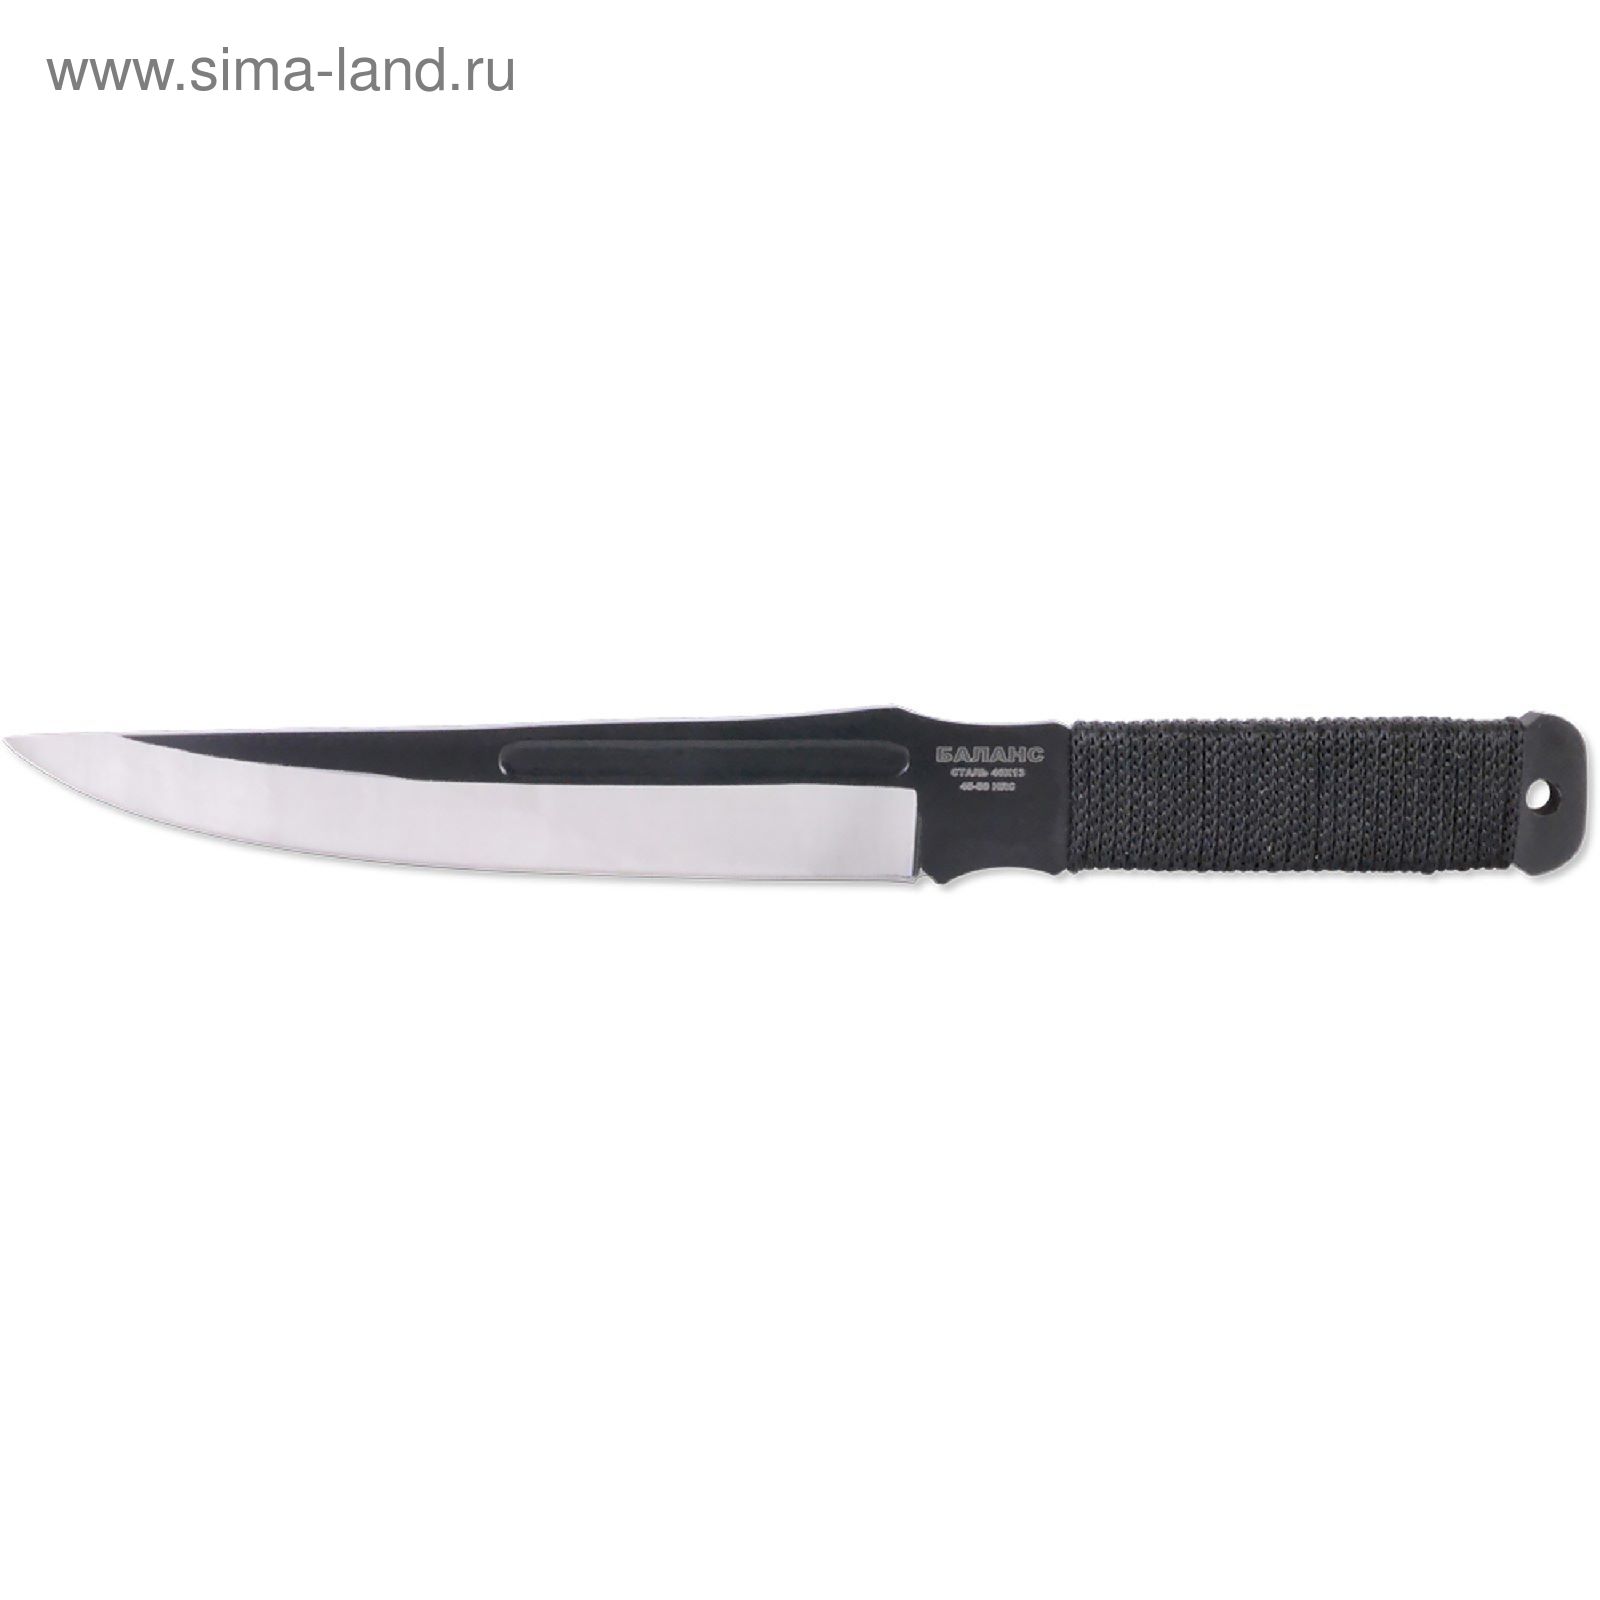 Нож метательный "Баланс" М-115-3, рукоять-металл/капрон, сталь 40х13